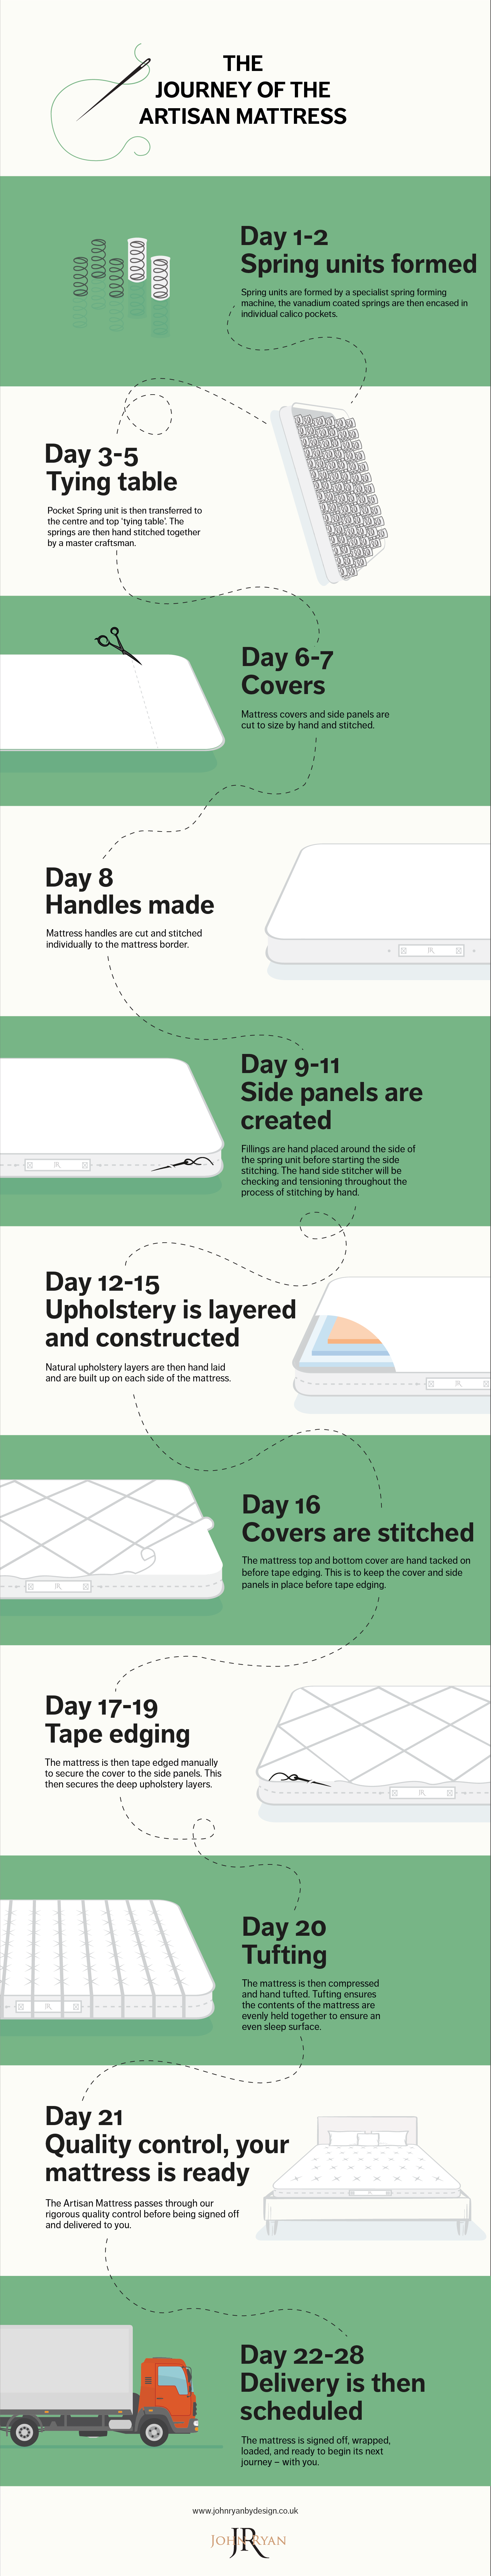 artisan mattress journey infographic